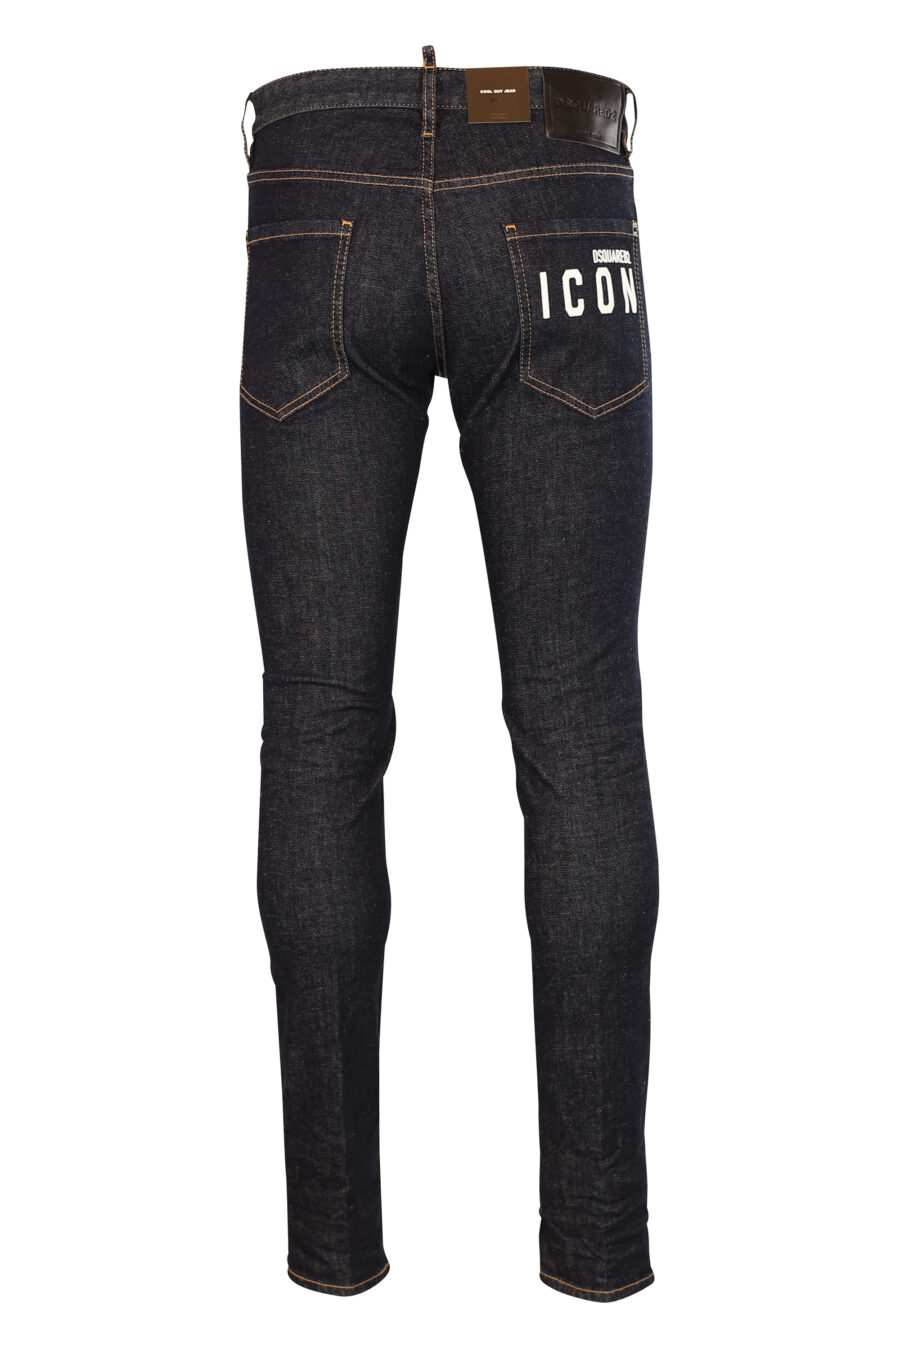 Jeans "B-Icon cool guy" dunkelblau - 8052134107485 3